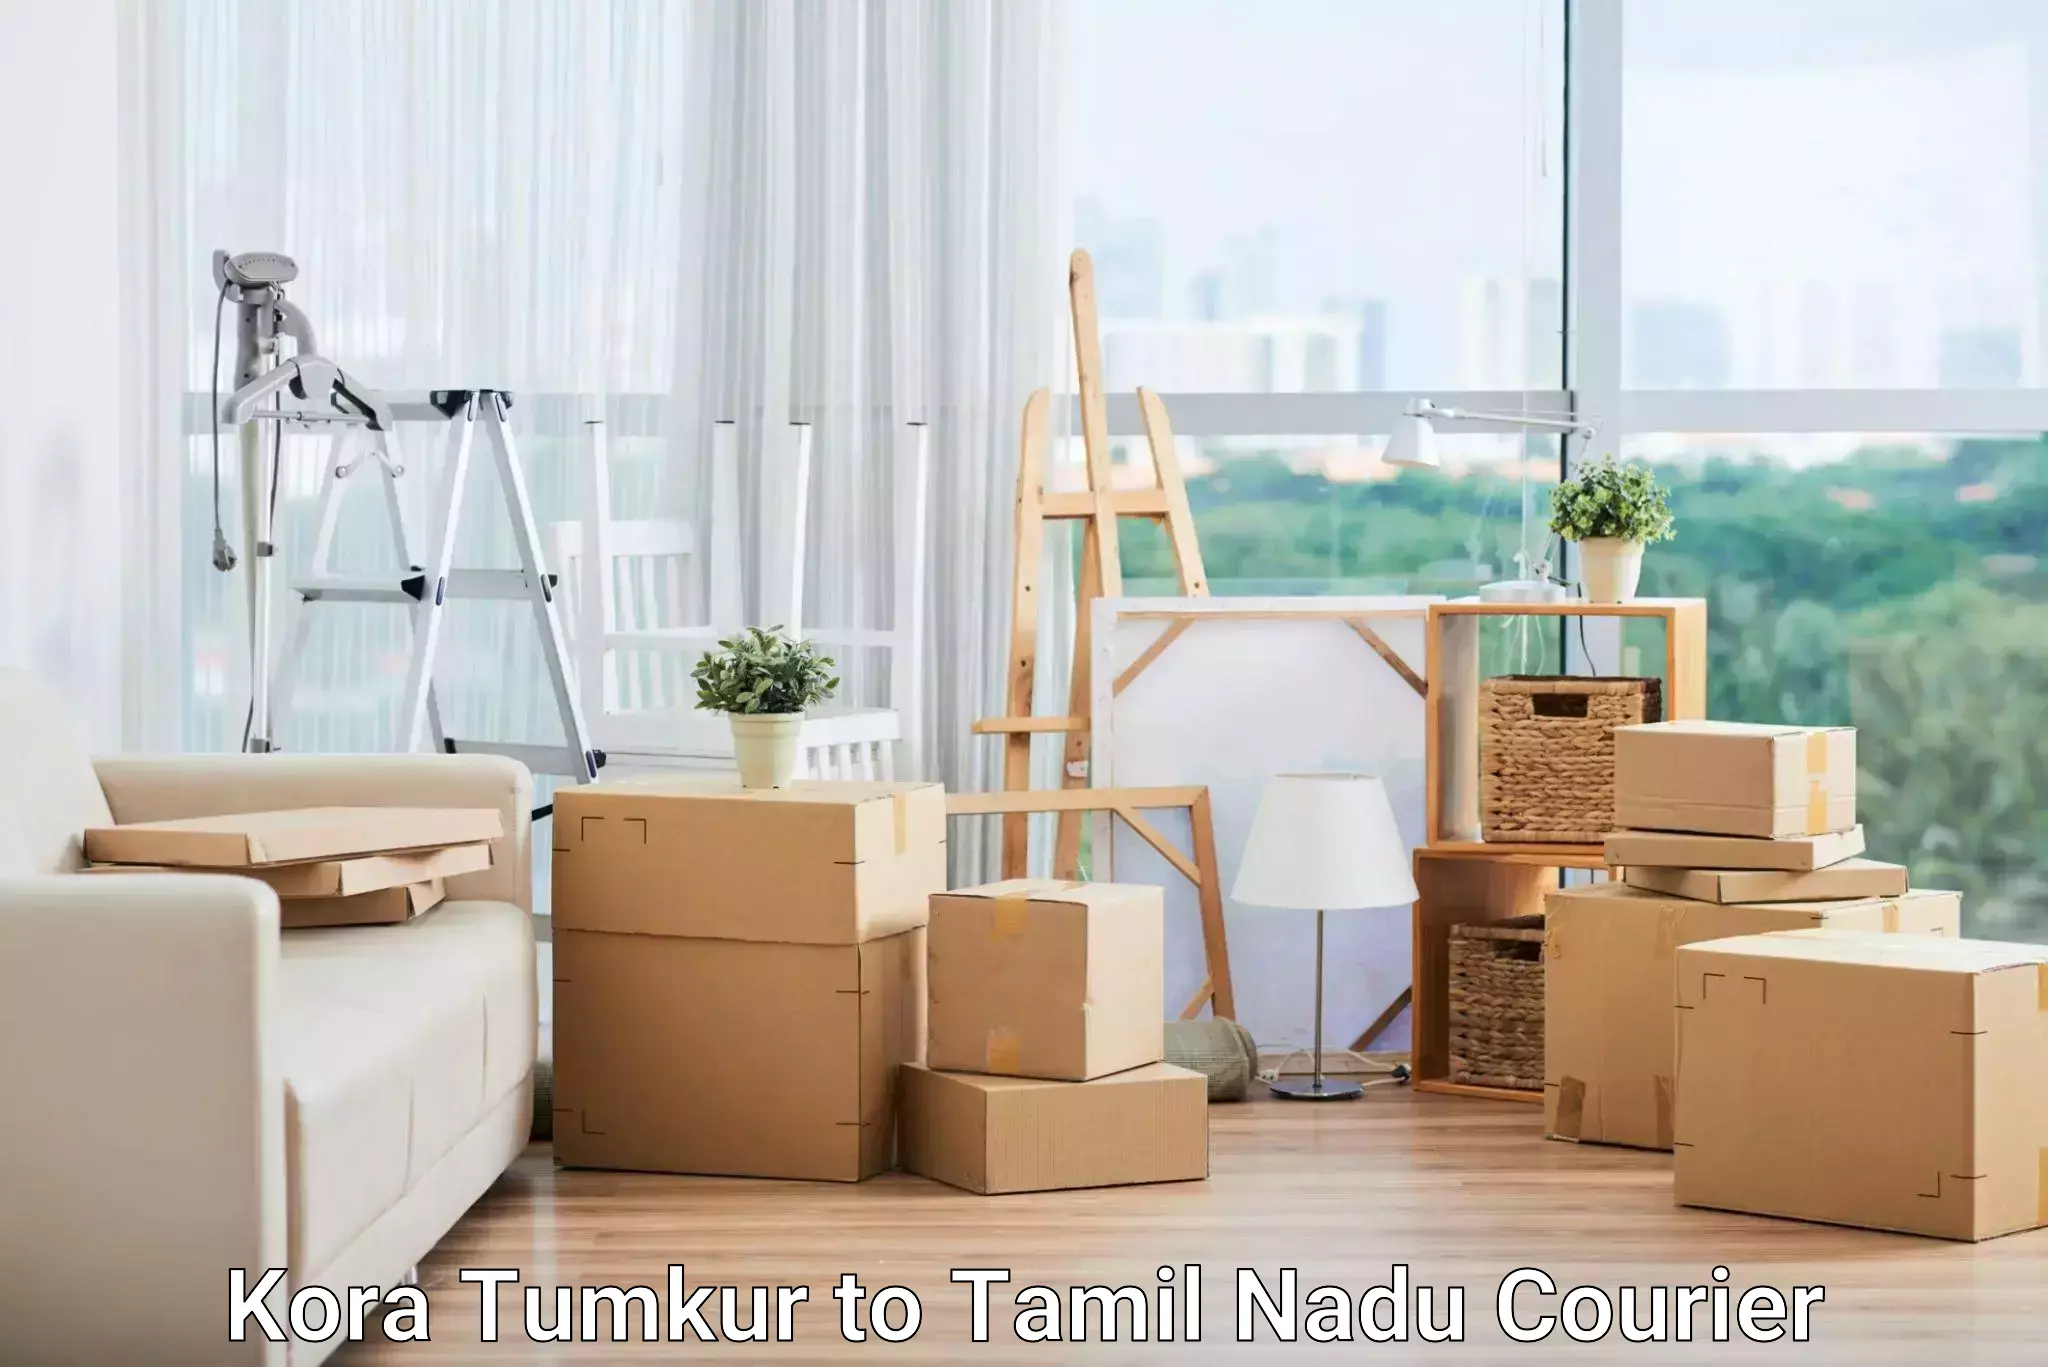 Logistics and distribution Kora Tumkur to Trichy